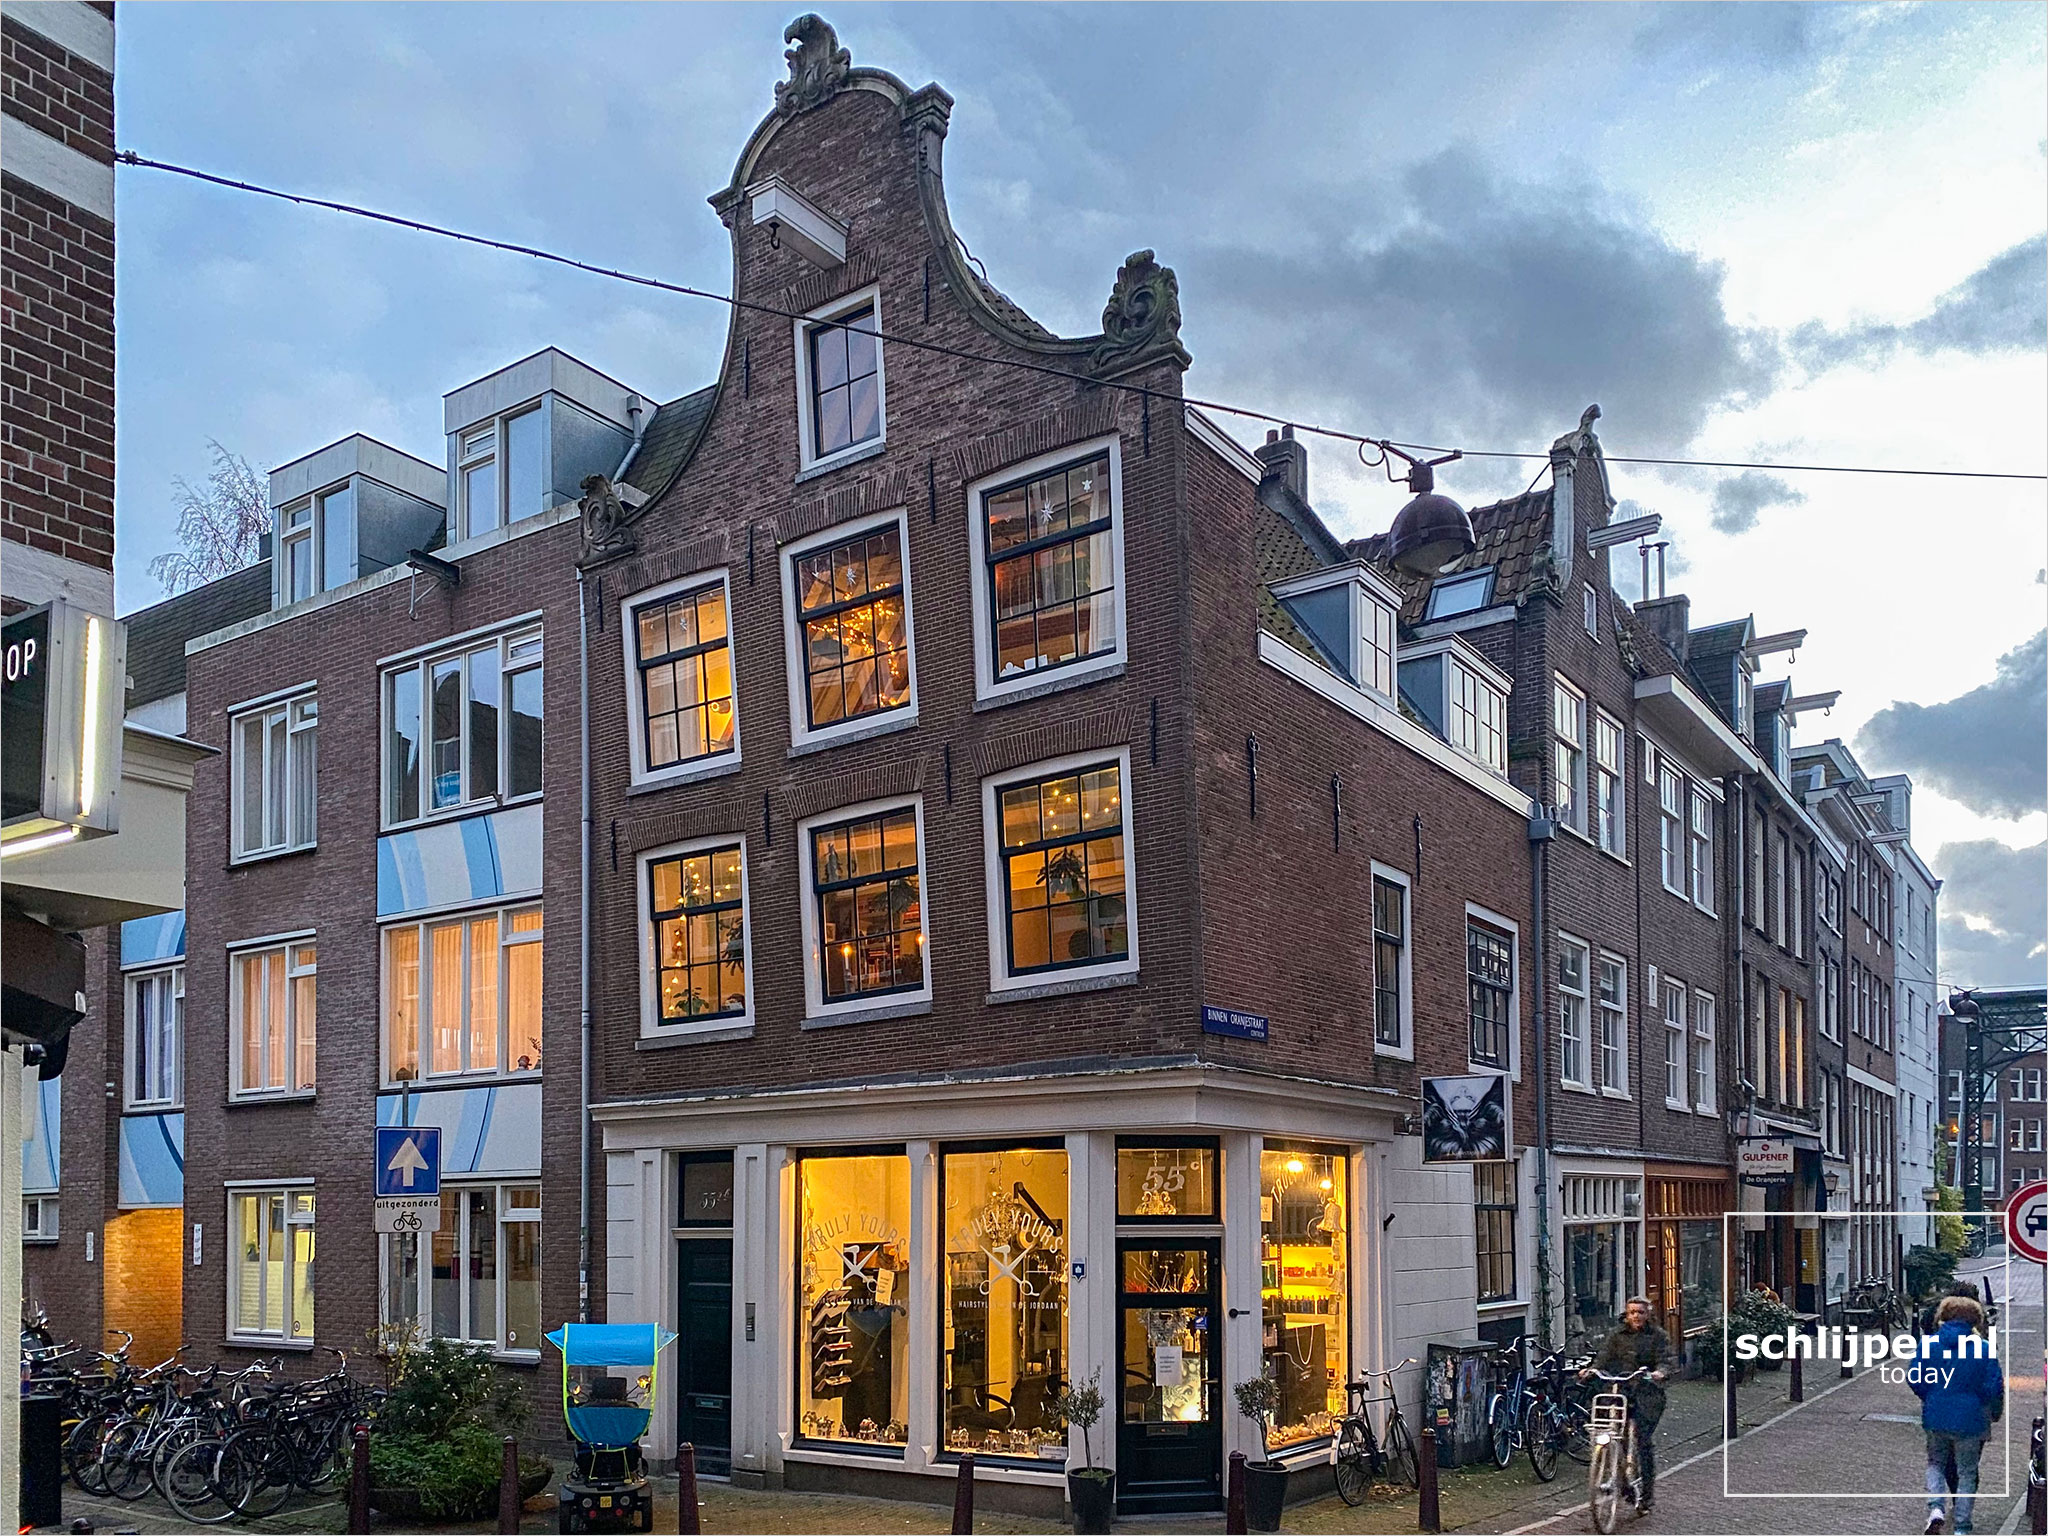 The Netherlands, Amsterdam, 20 december 2020